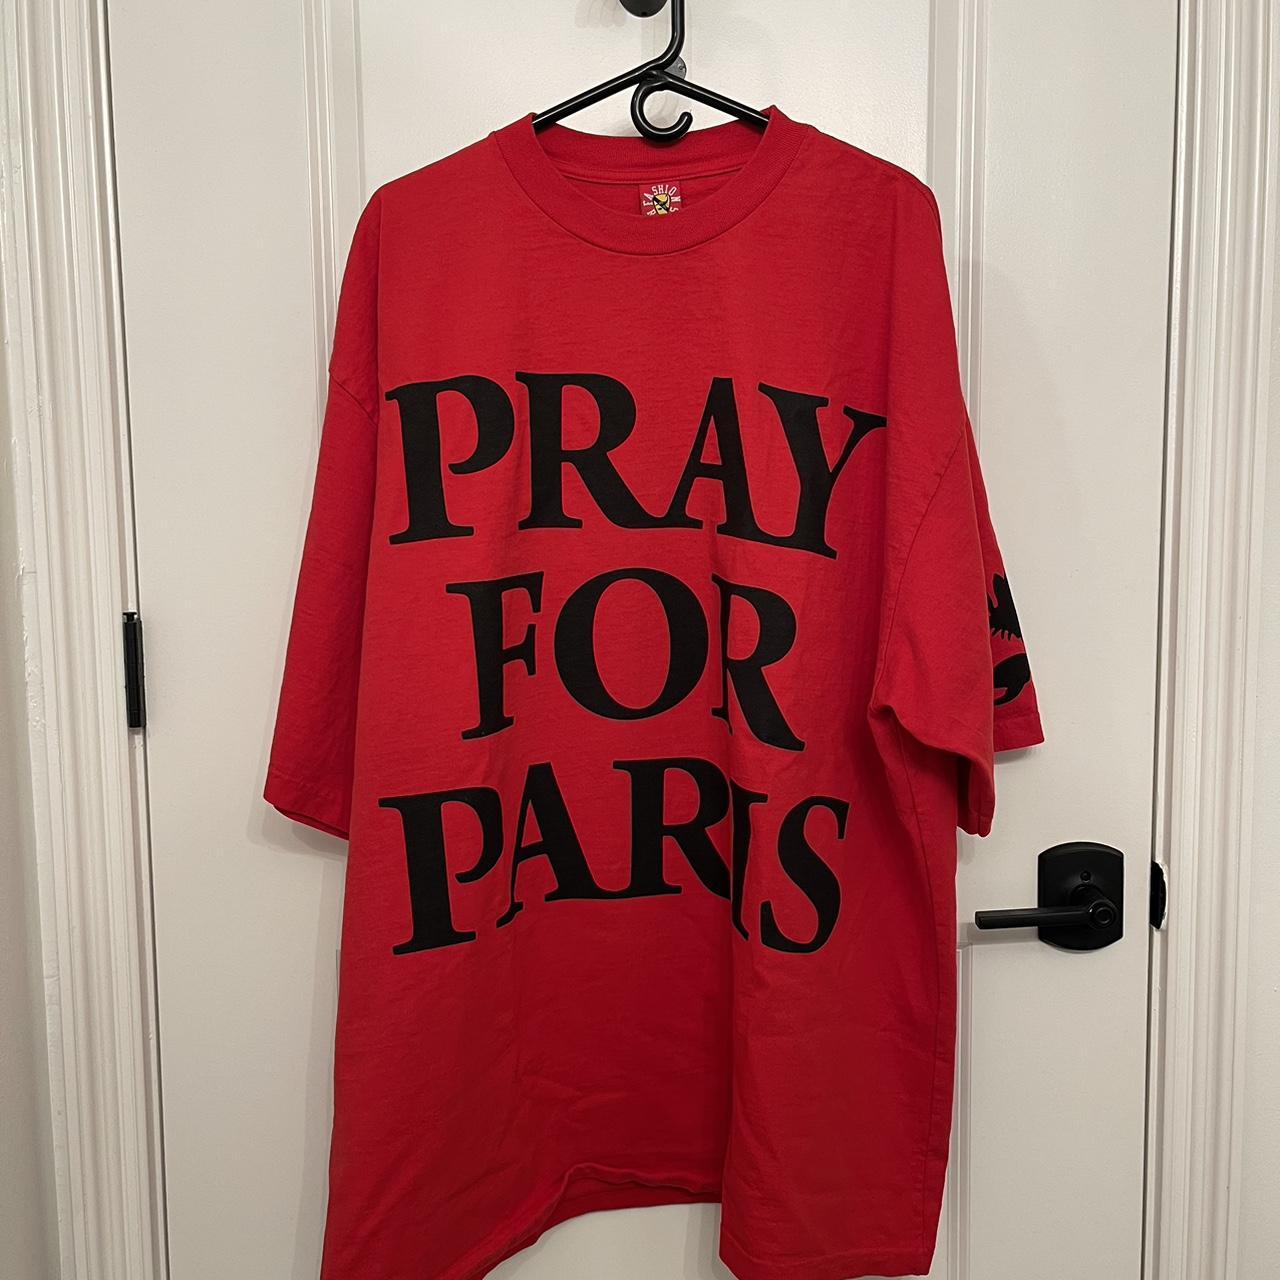 GXFR Blientele Westside Gunn Pray for Paris/And Then...